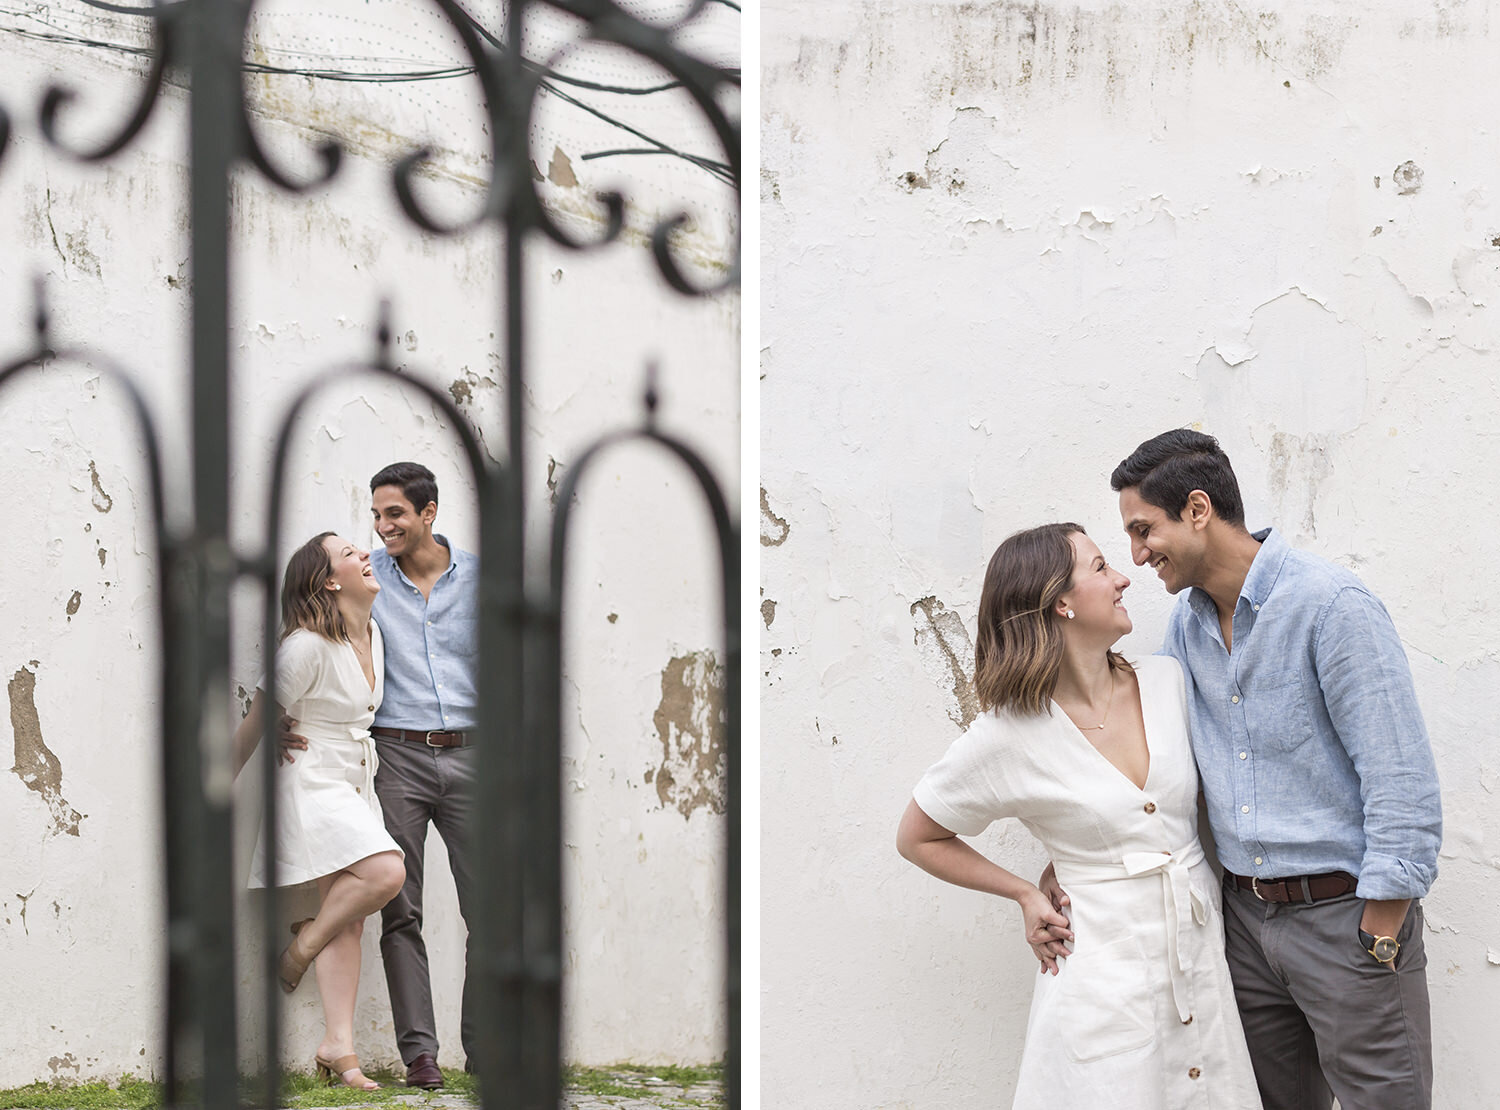 surprise-wedding-proposal-photographer-lisbon-ana-lucia-da-cruz-terra-fotografia-flytographer-50.jpg